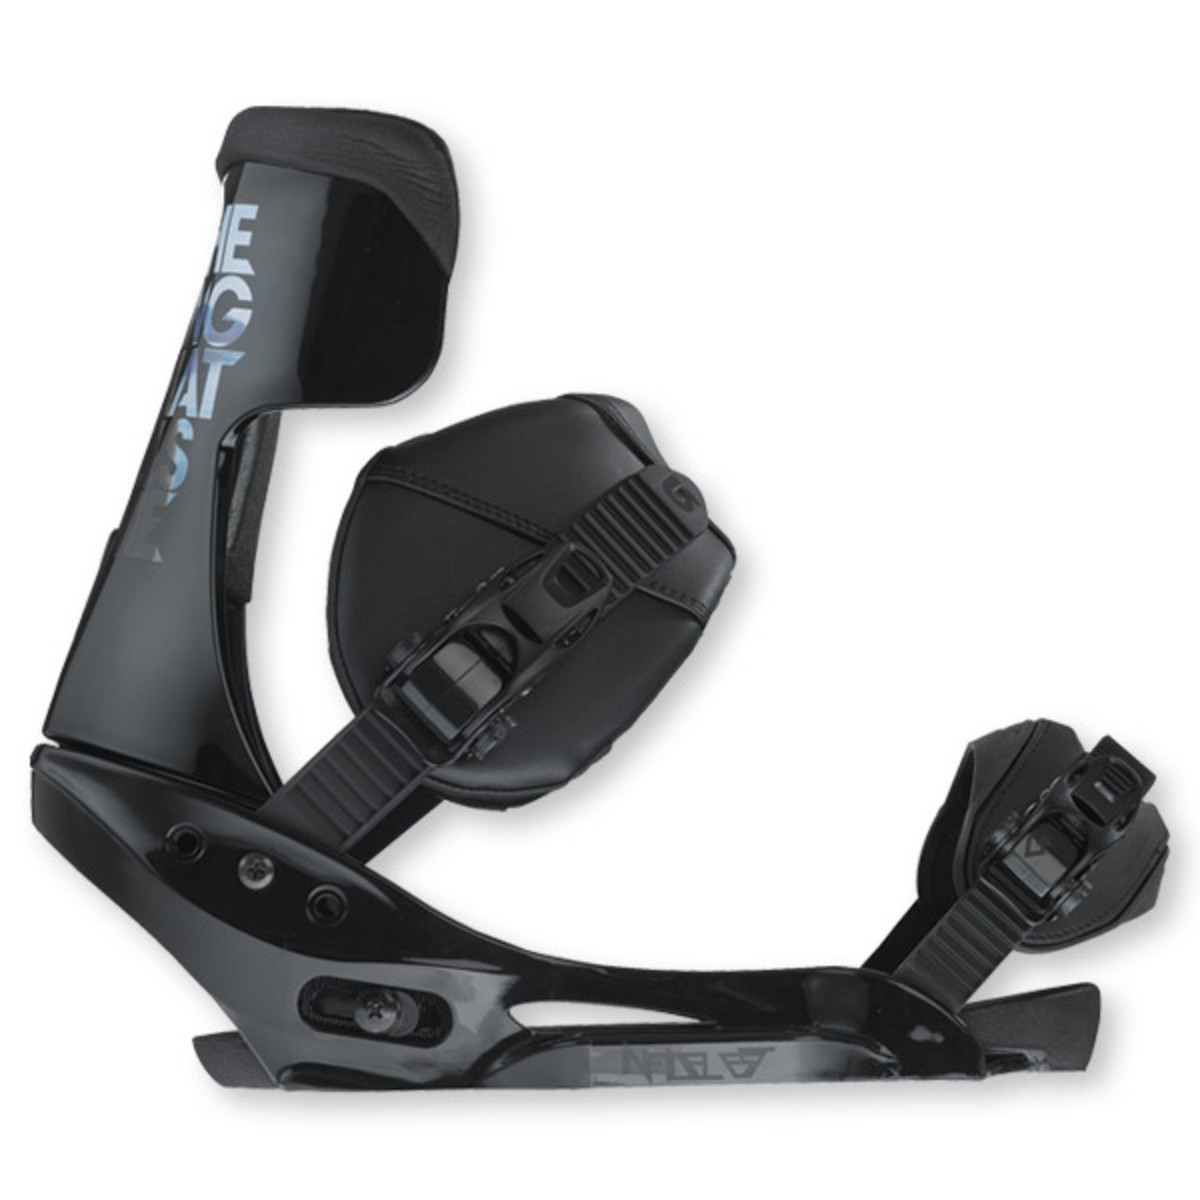 Buy Burton Infidel EST Bindings - Shop for Snowboard Gear at Snowboarder Magazine -